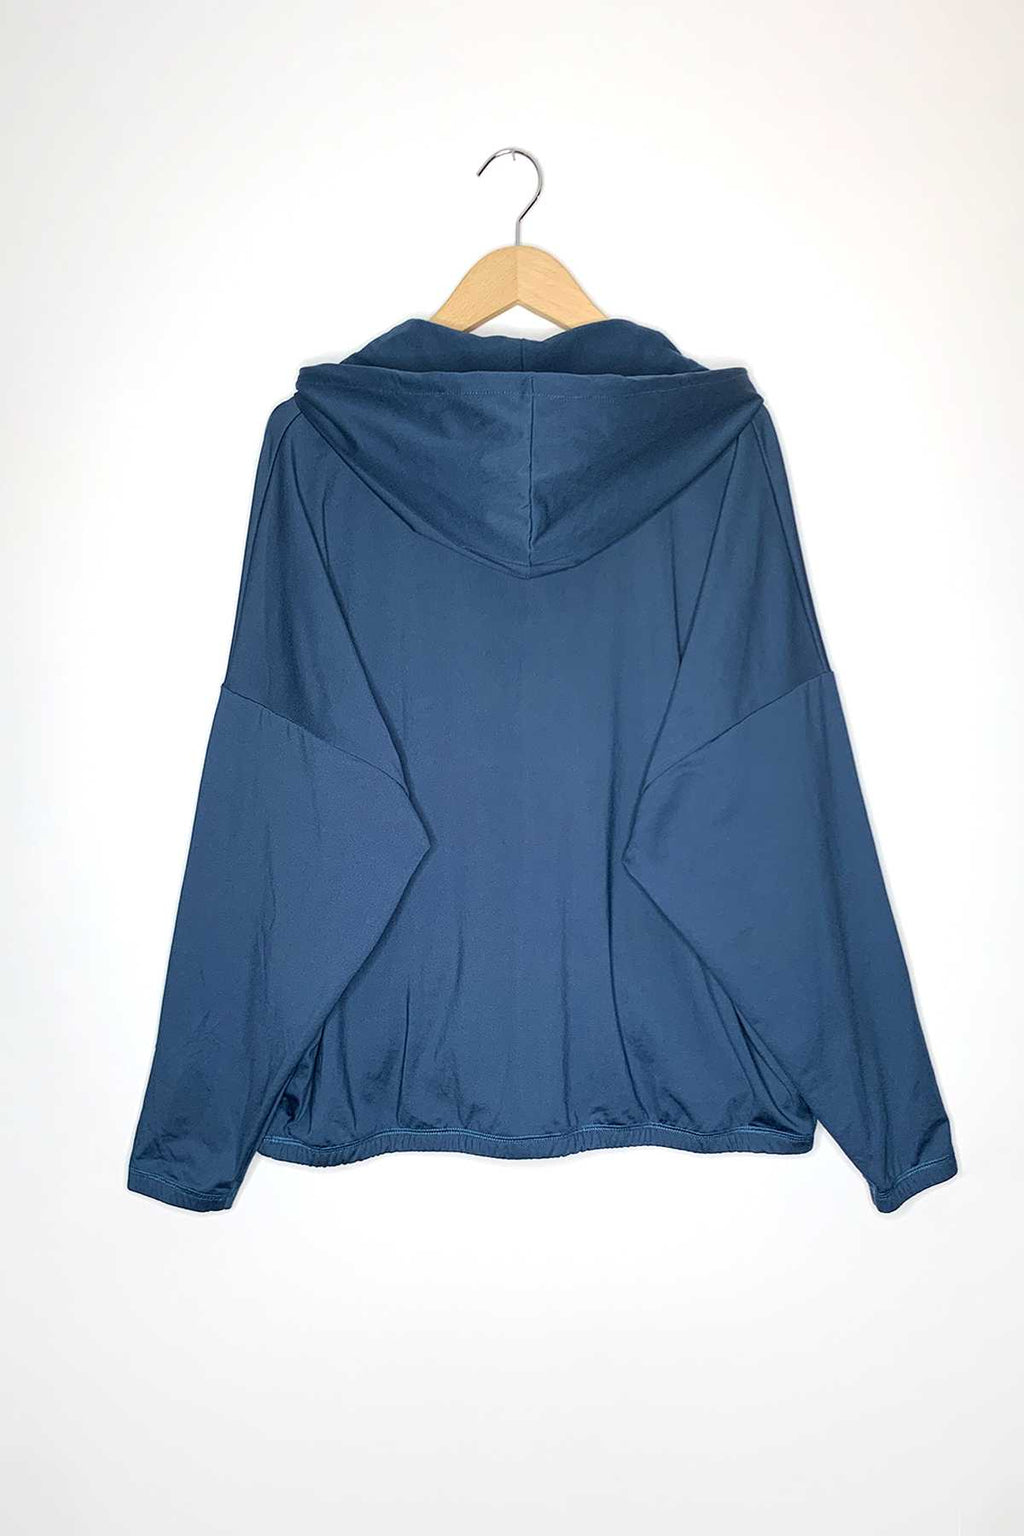 #350 - YUJ X DAMART Women's Zip Jacket // Size L YUJ - House of Mindfulness